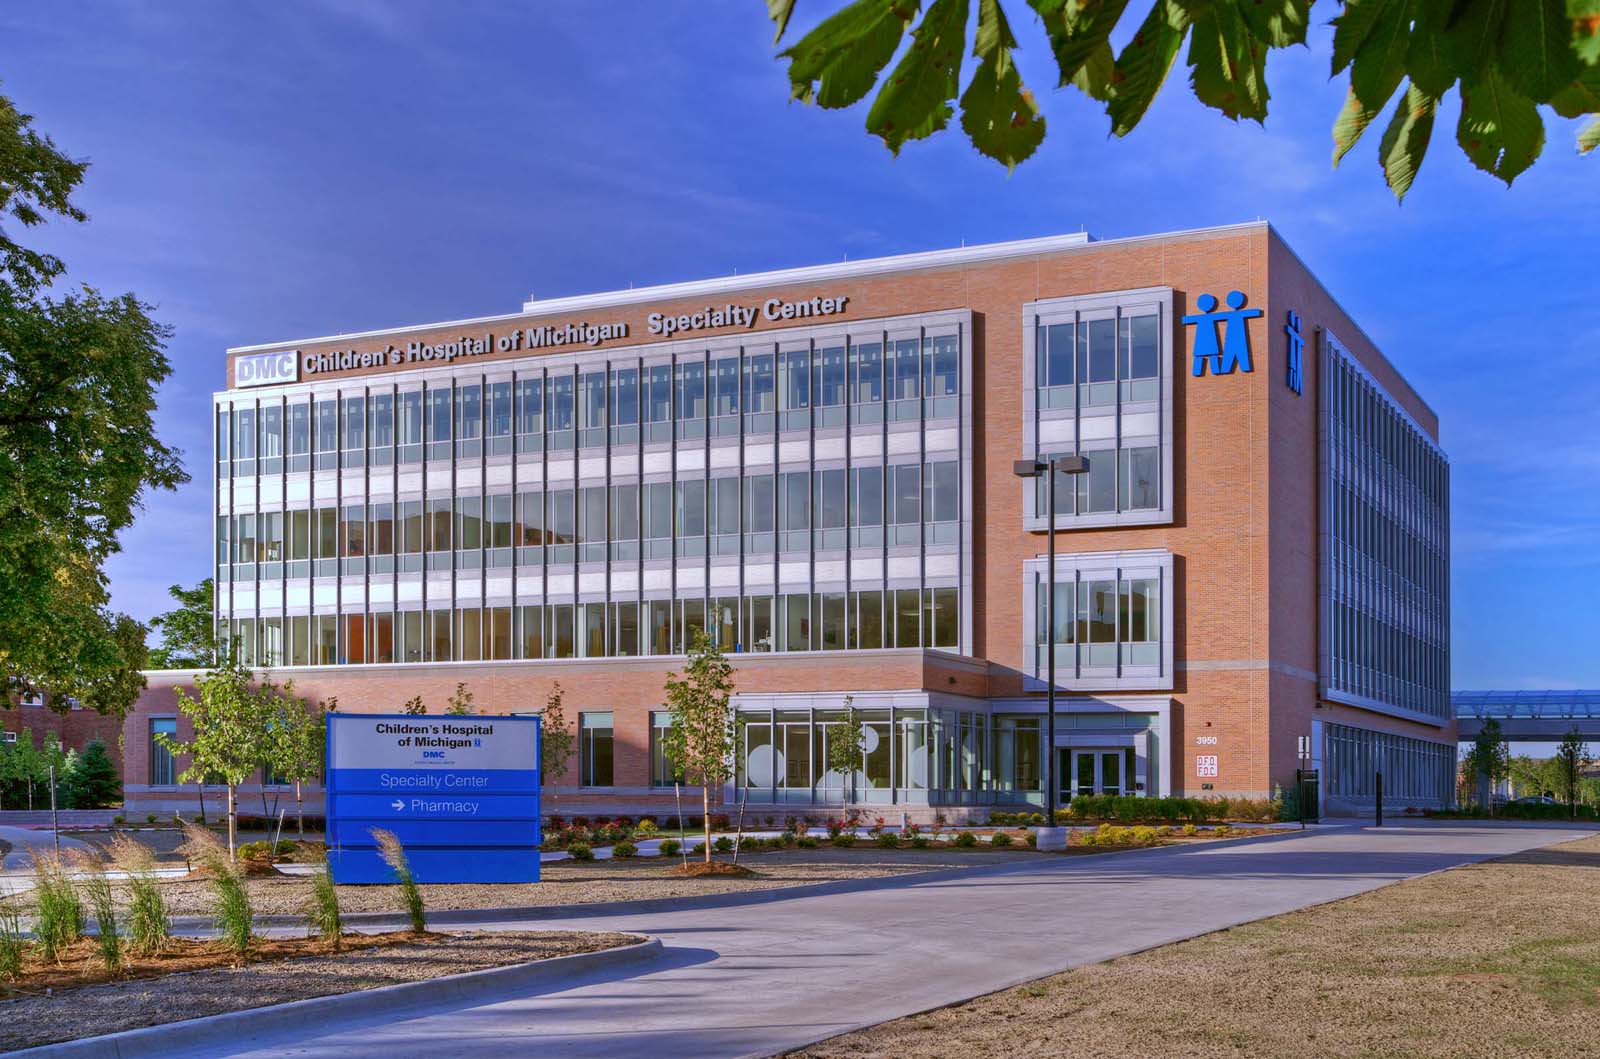 DMC - Children's Hospital of Michigan